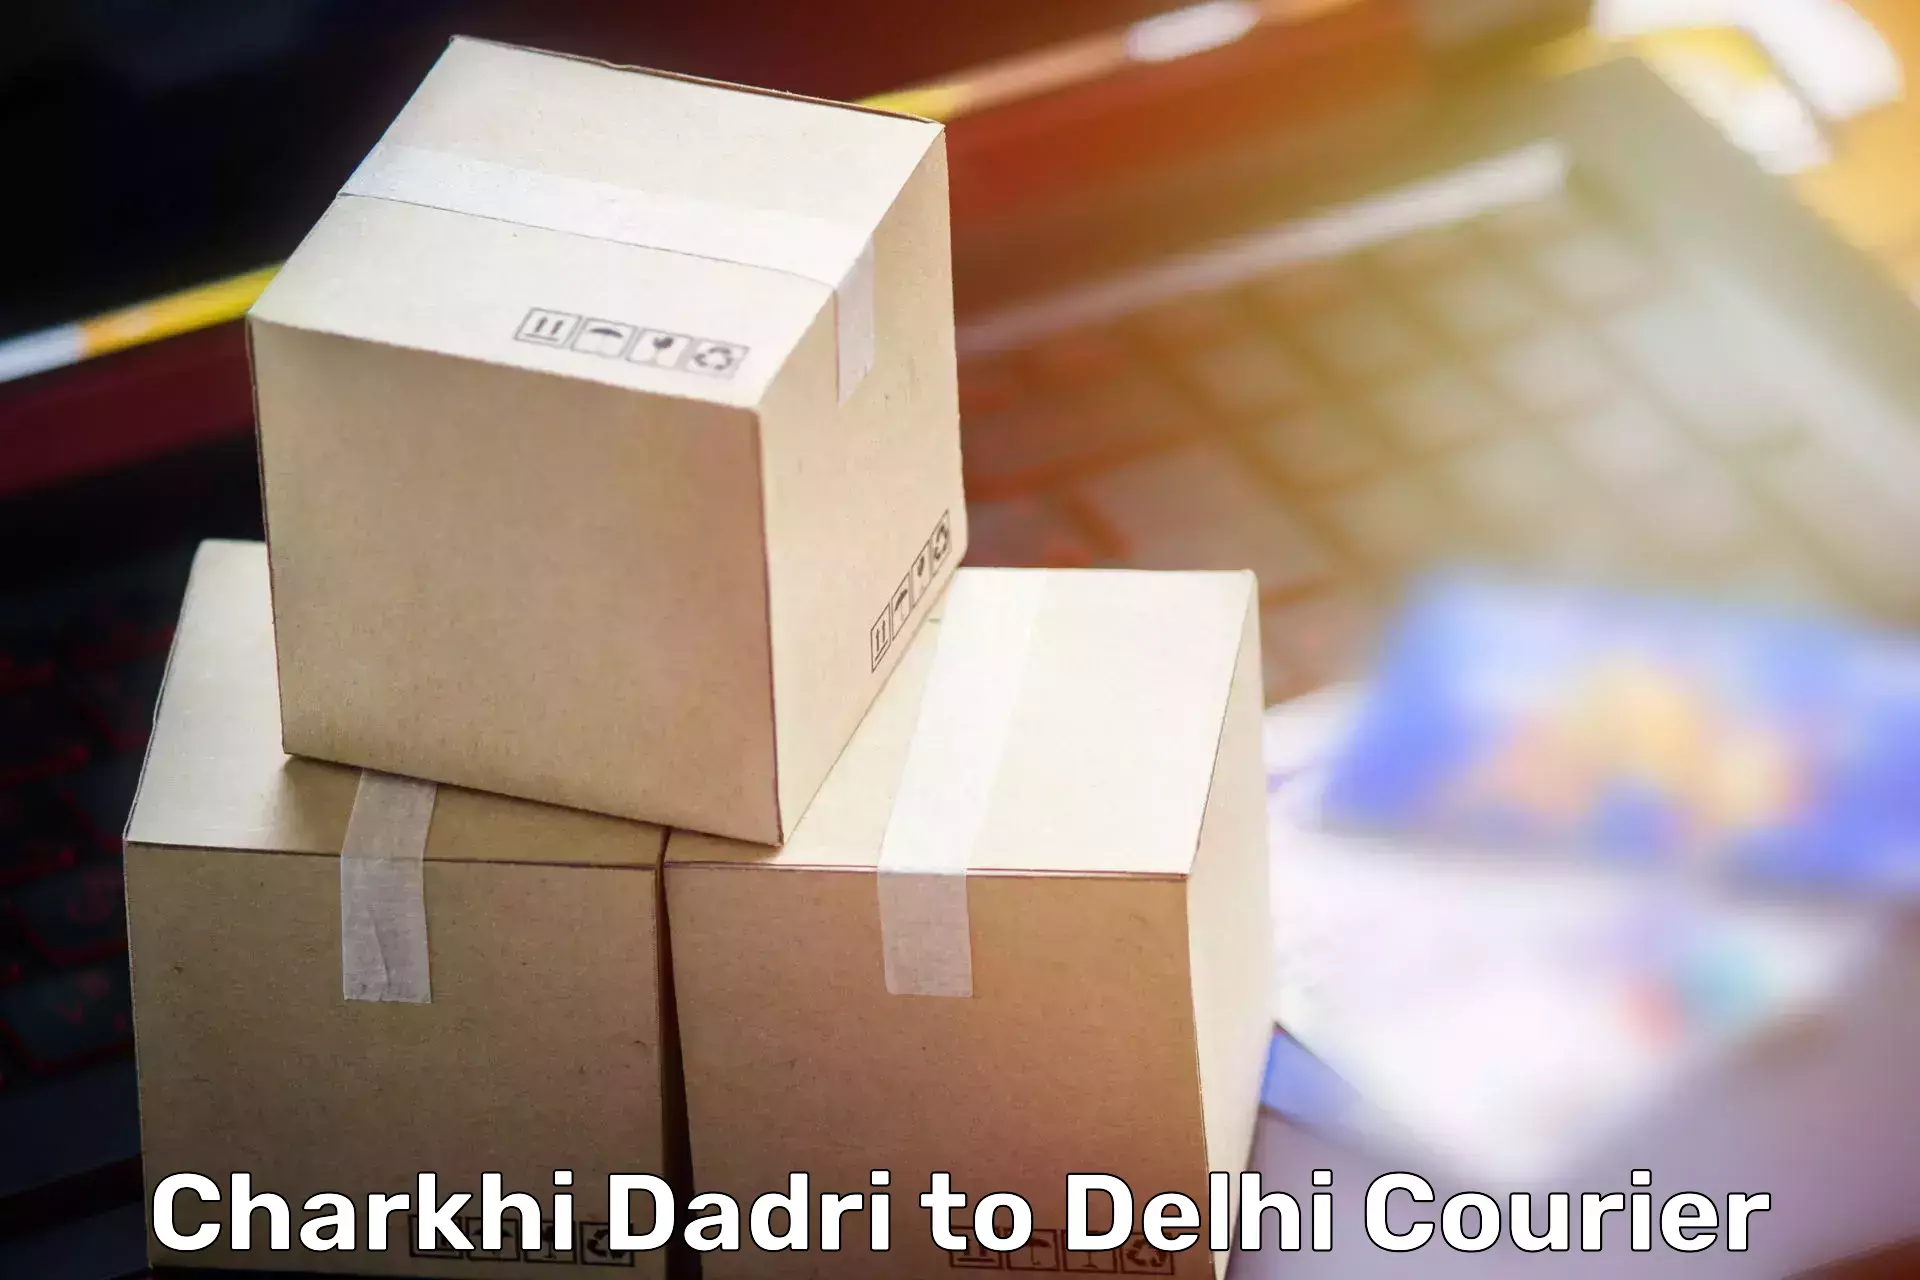 Professional moving company Charkhi Dadri to East Delhi